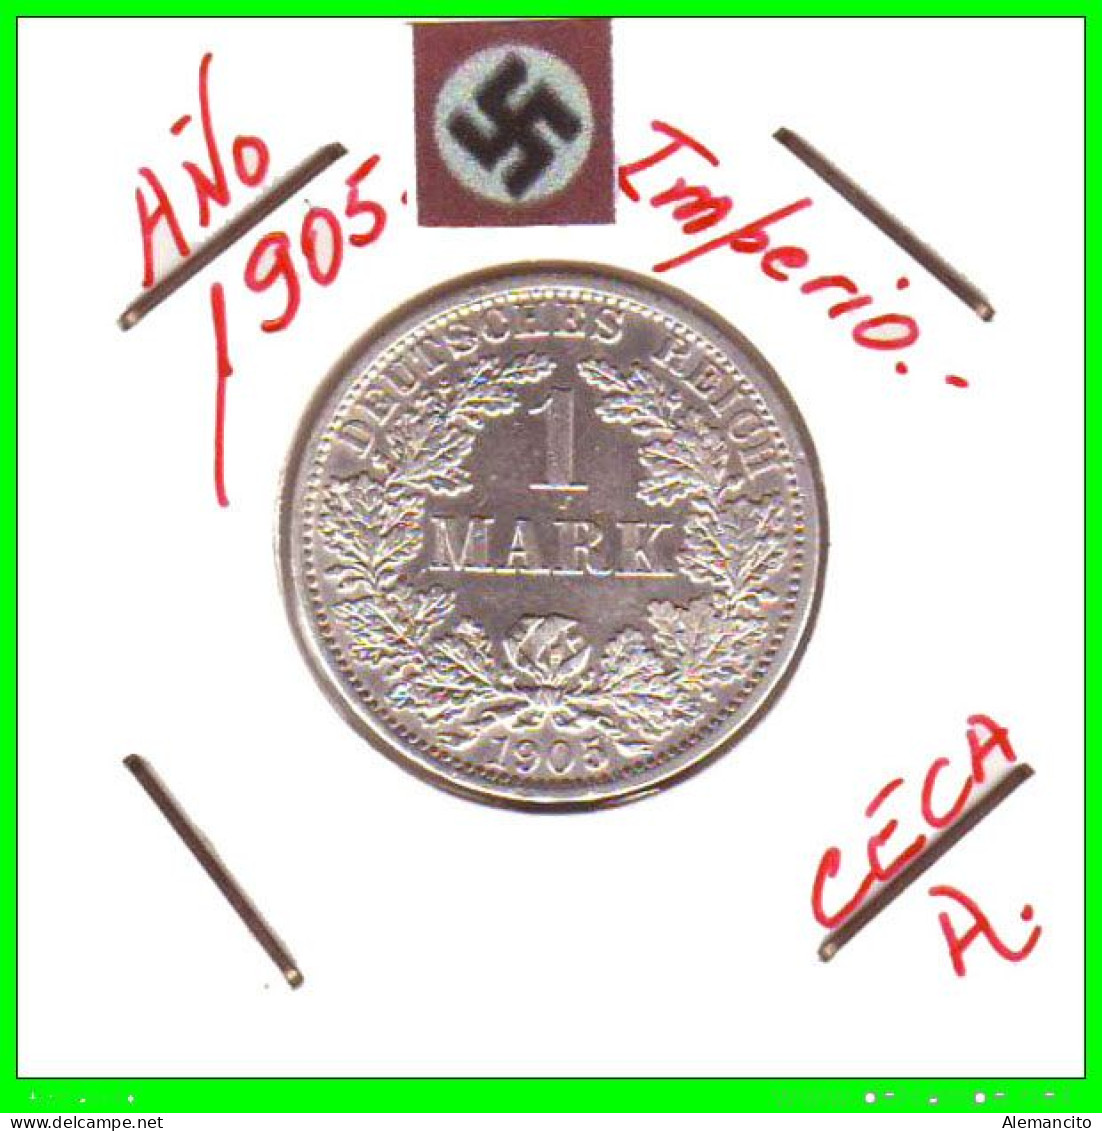 GERMANY - IMPERIO - DEUTSCHES REICH - 1 MARK. AÑO 1905 - CECA -A - MONEDA DE PLATA  24 MM. RULER: WILHELM II 1890-1916 - 1 Mark